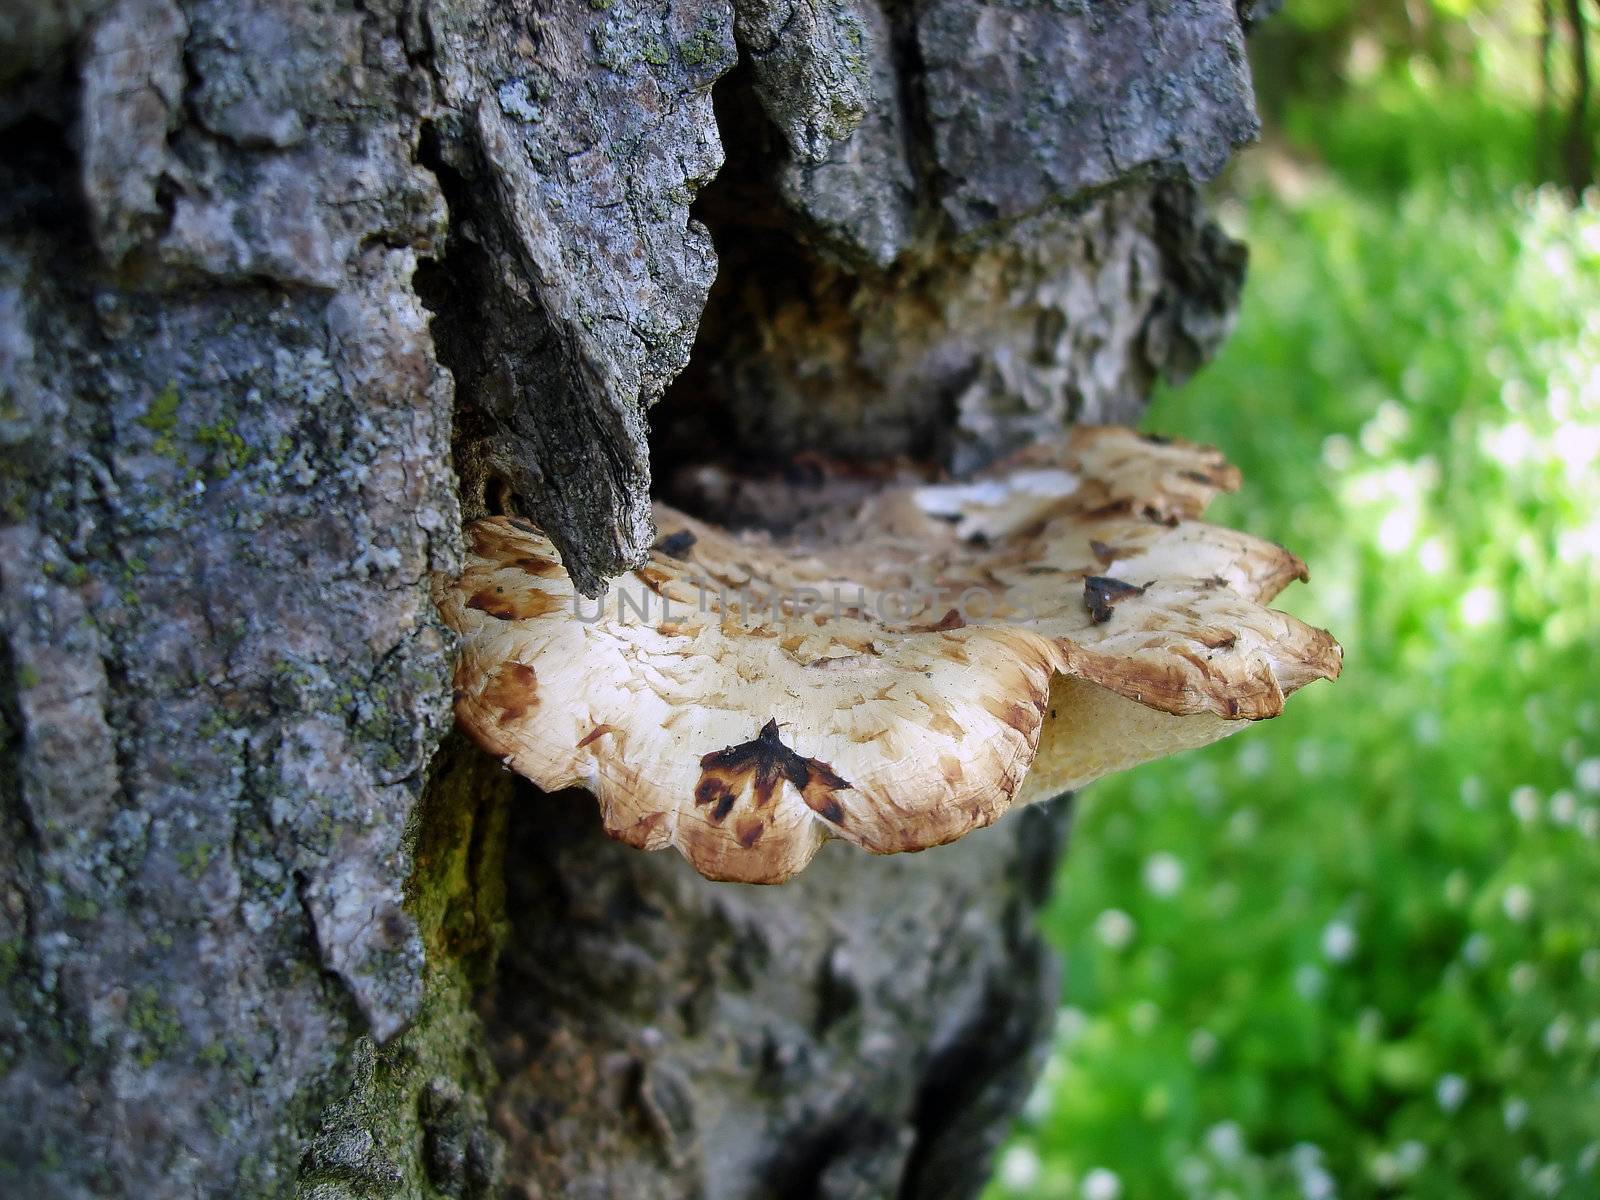 tree fungi growing alongside a tree trunk